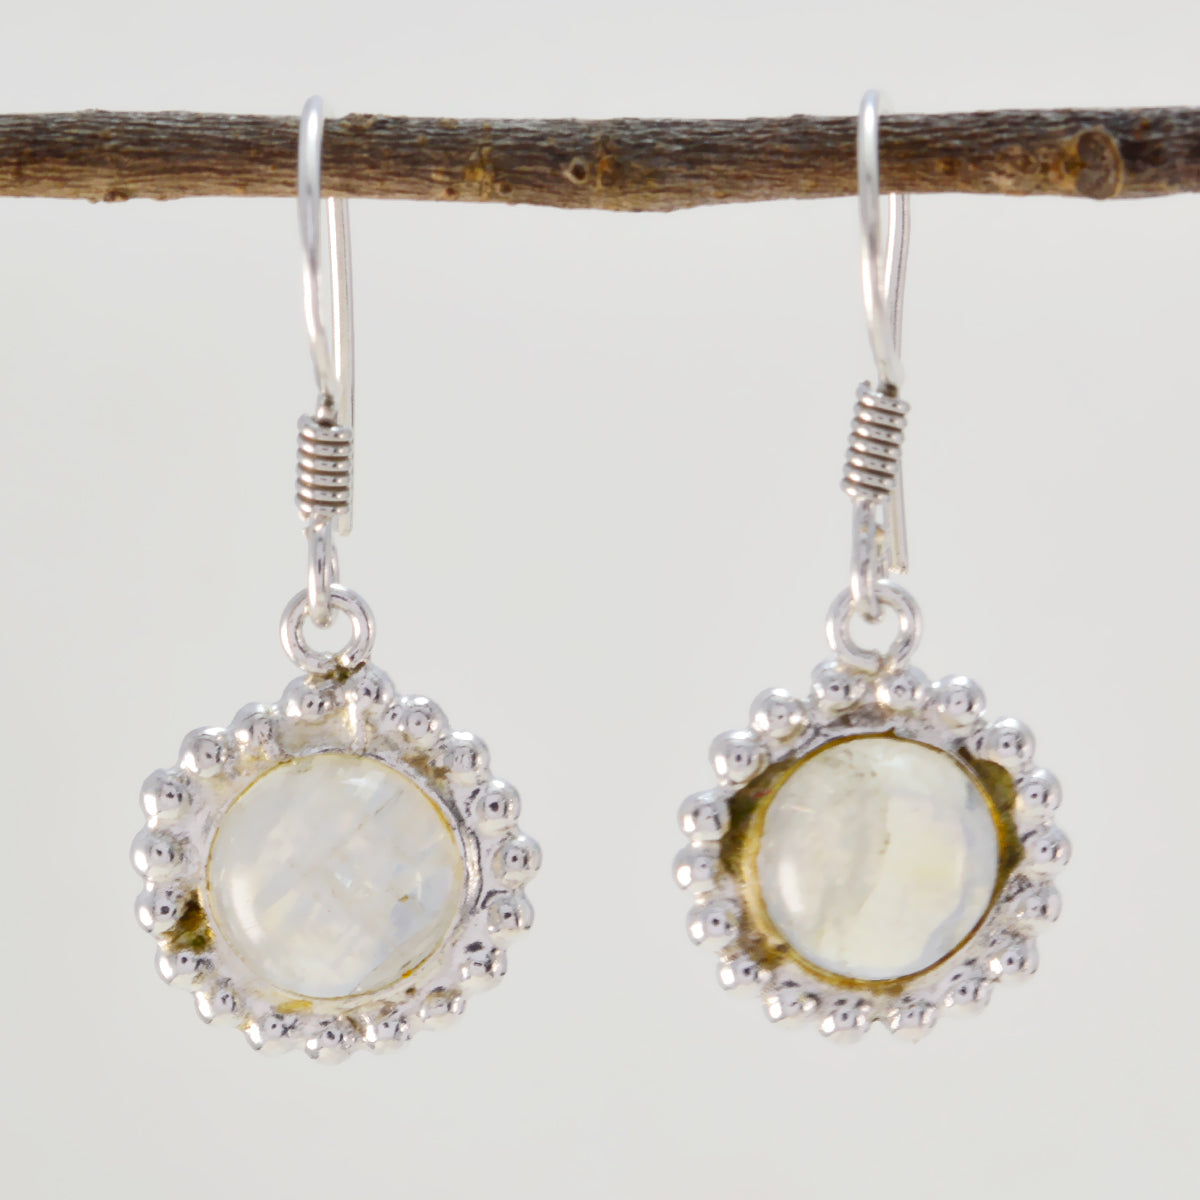 Riyo Good Gemstones round Cabochon White Rainbow Moonstone Silver Earrings Faishonable day gift